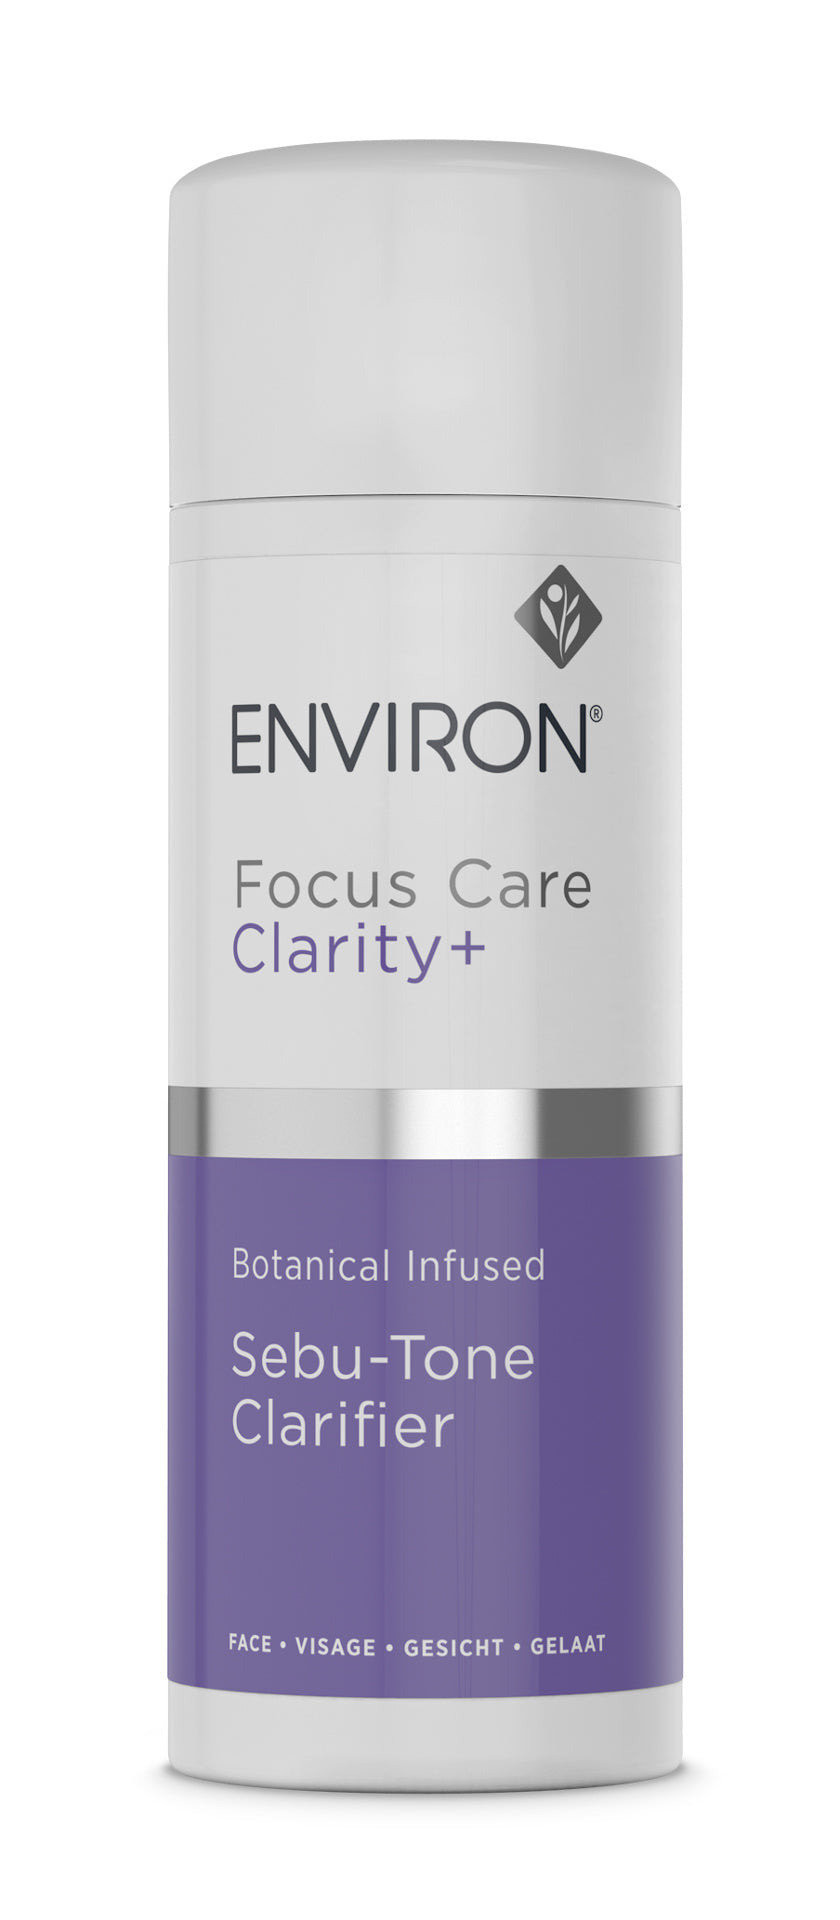 Focus Care Clarity+ |  Botanical Infused Sebu-Tone Clarifier